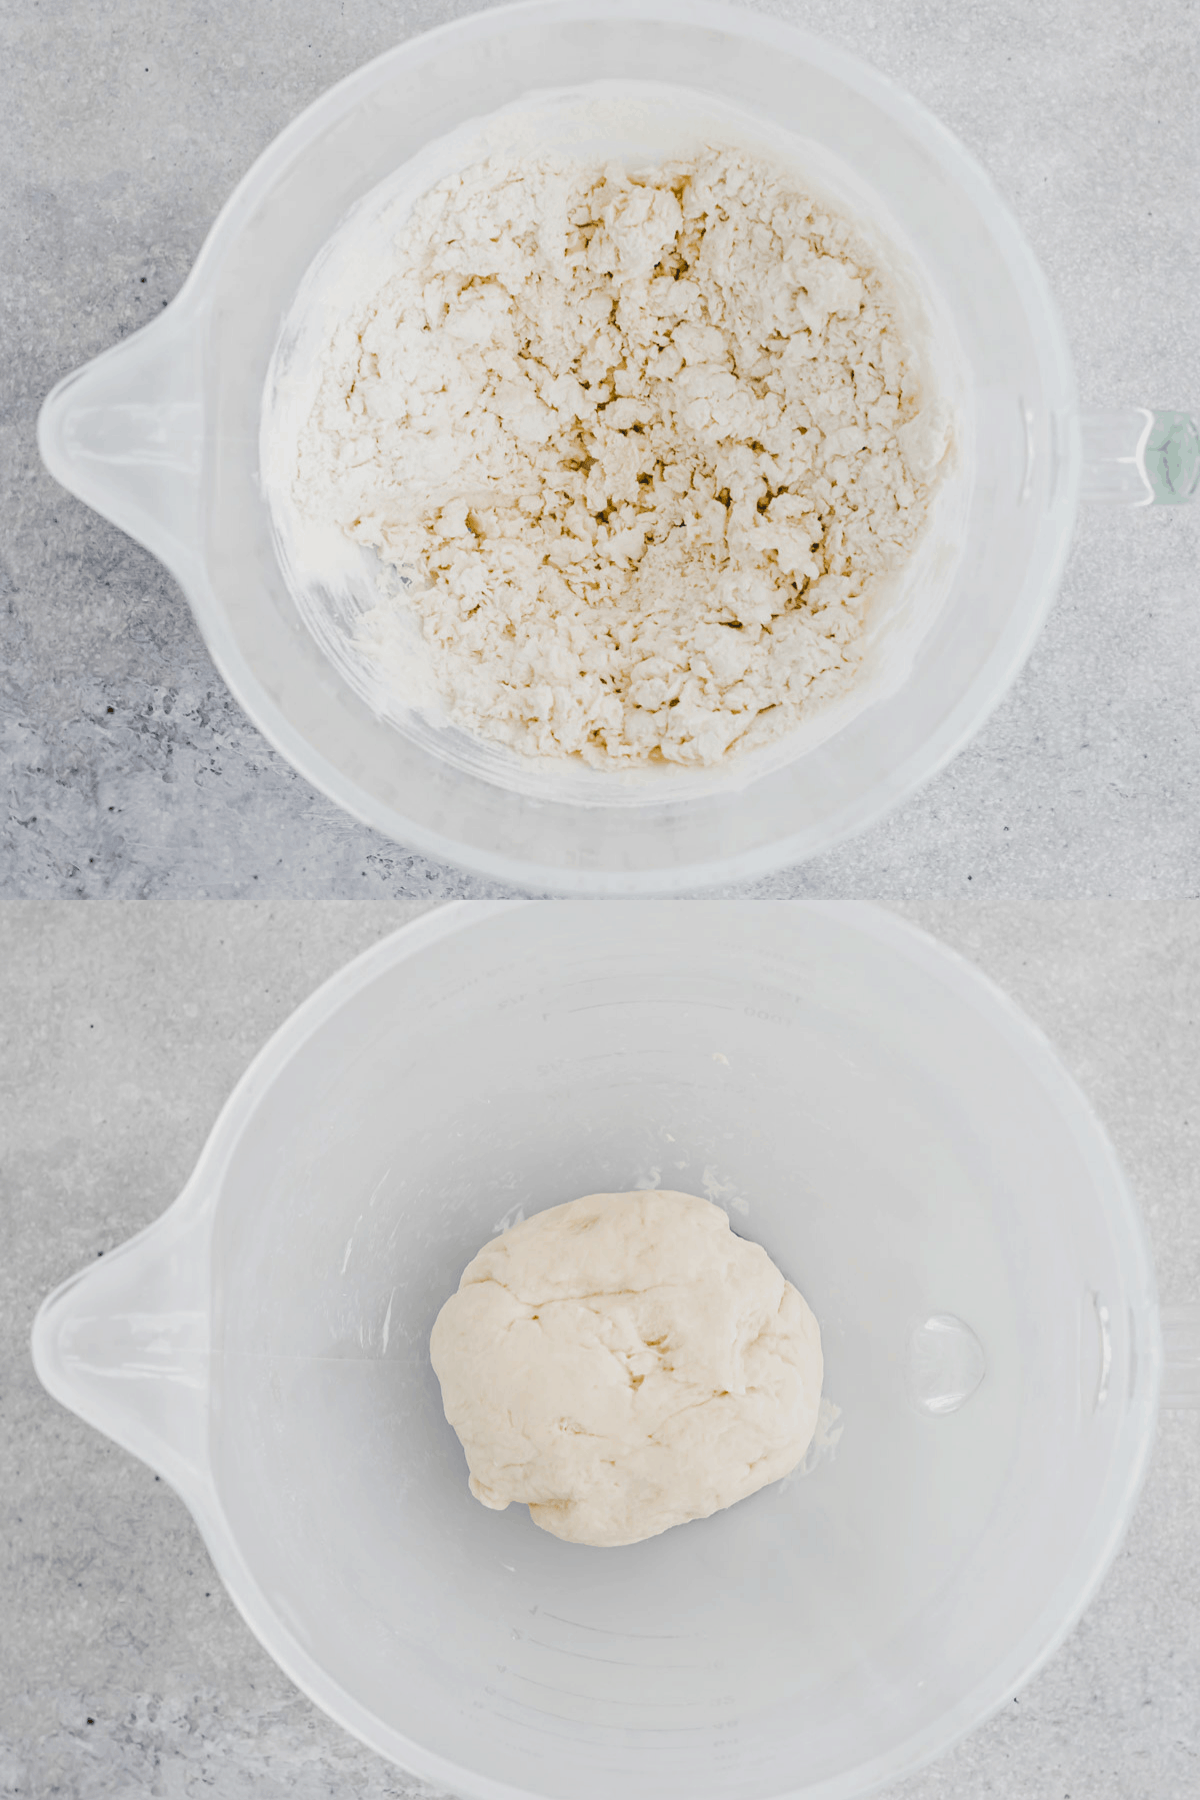 Scallion Pancakes Recipe Step 1-2